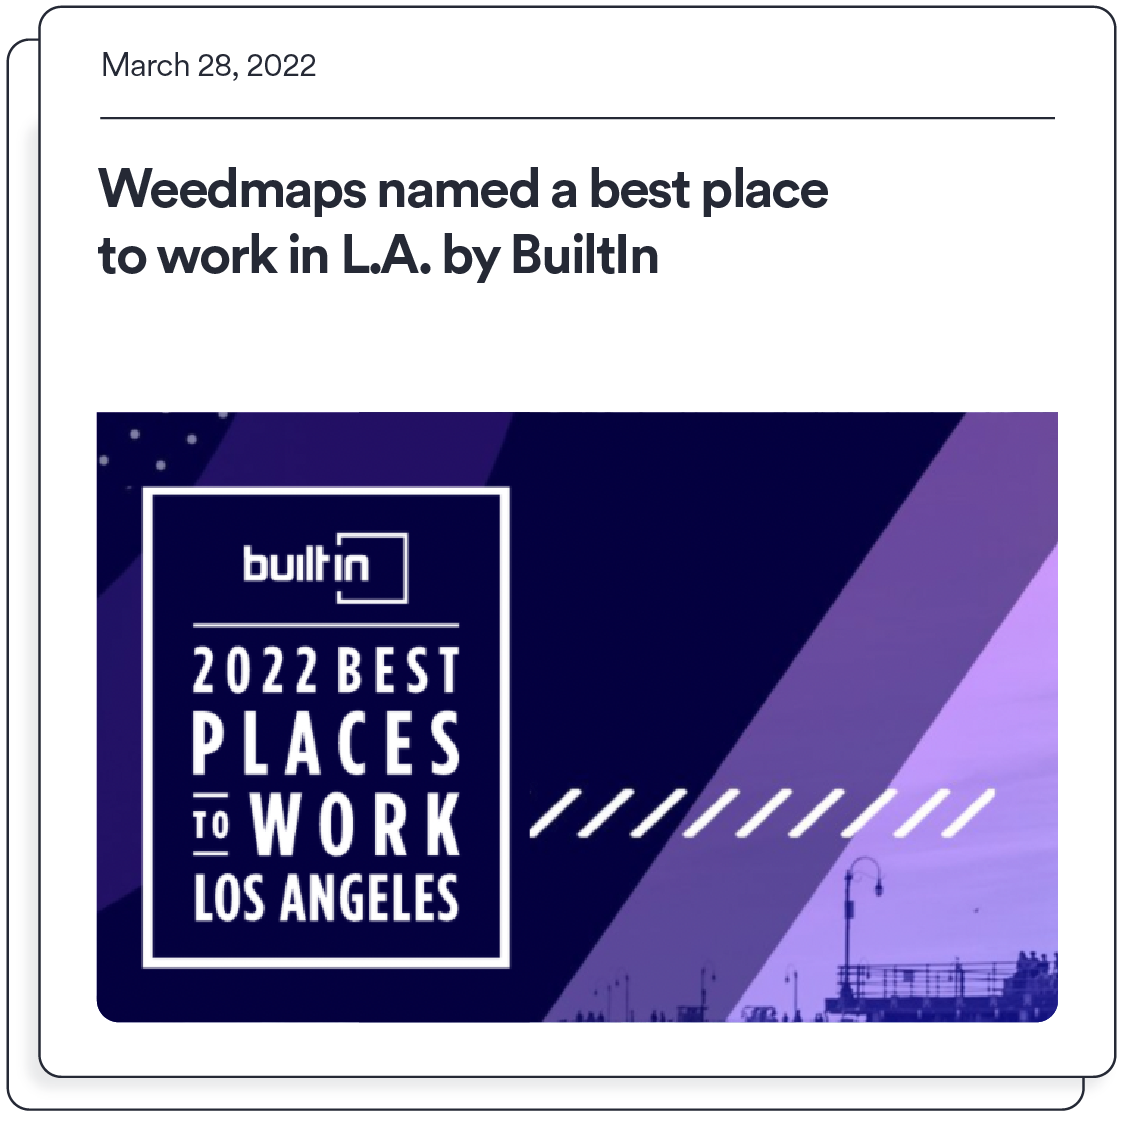 Weedmaps named Best Place to Work in Los Angeles